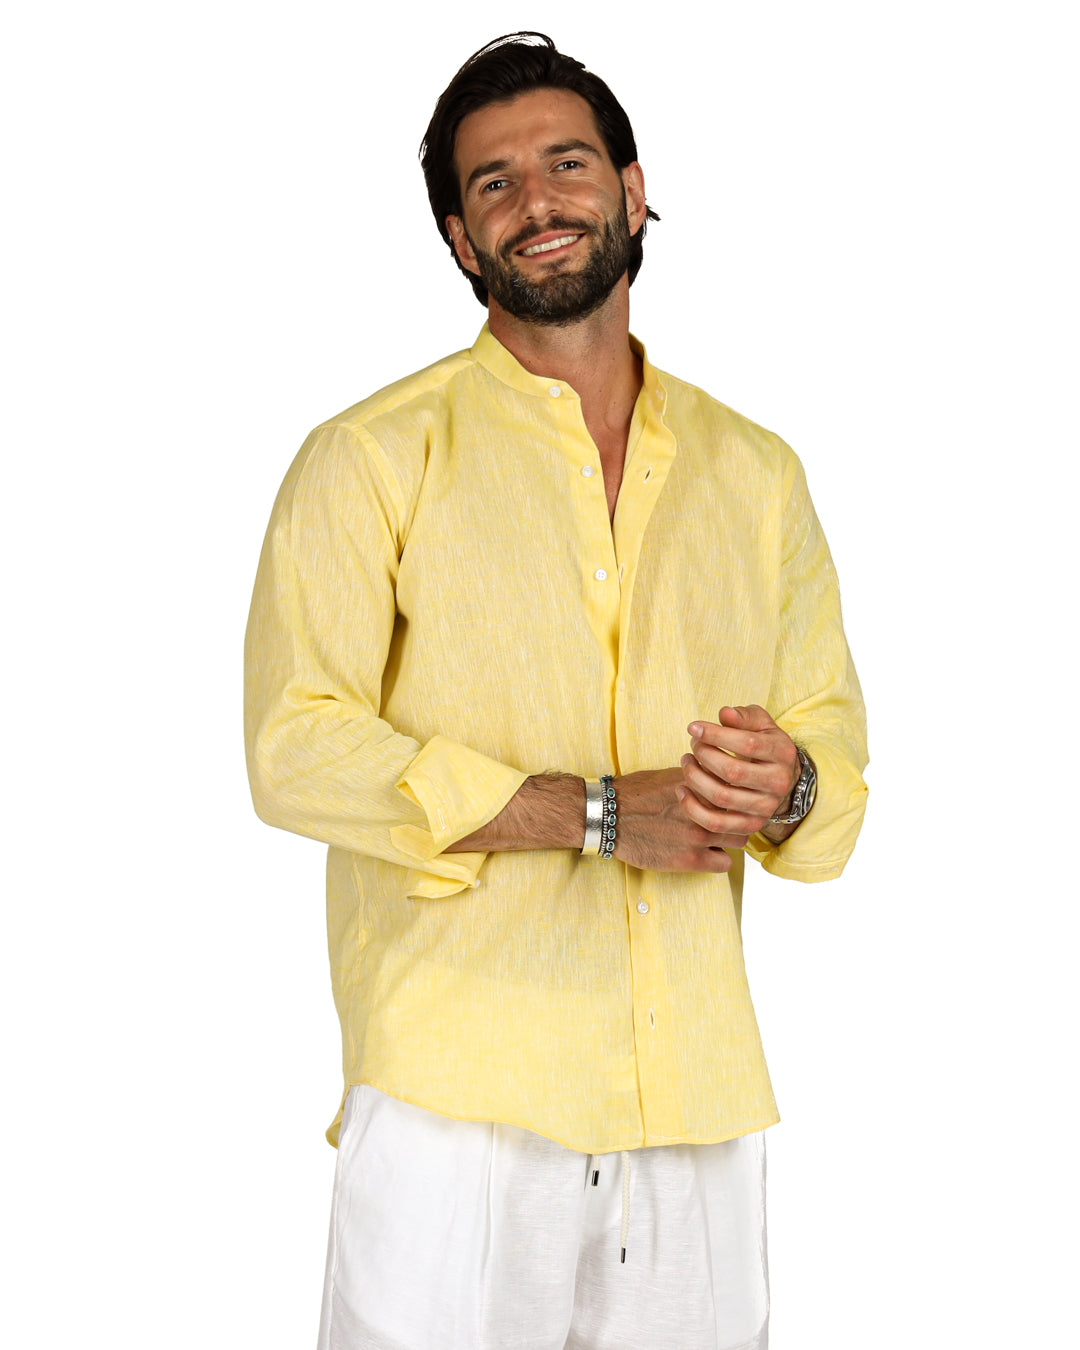 Positano - Yellow linen Korean shirt